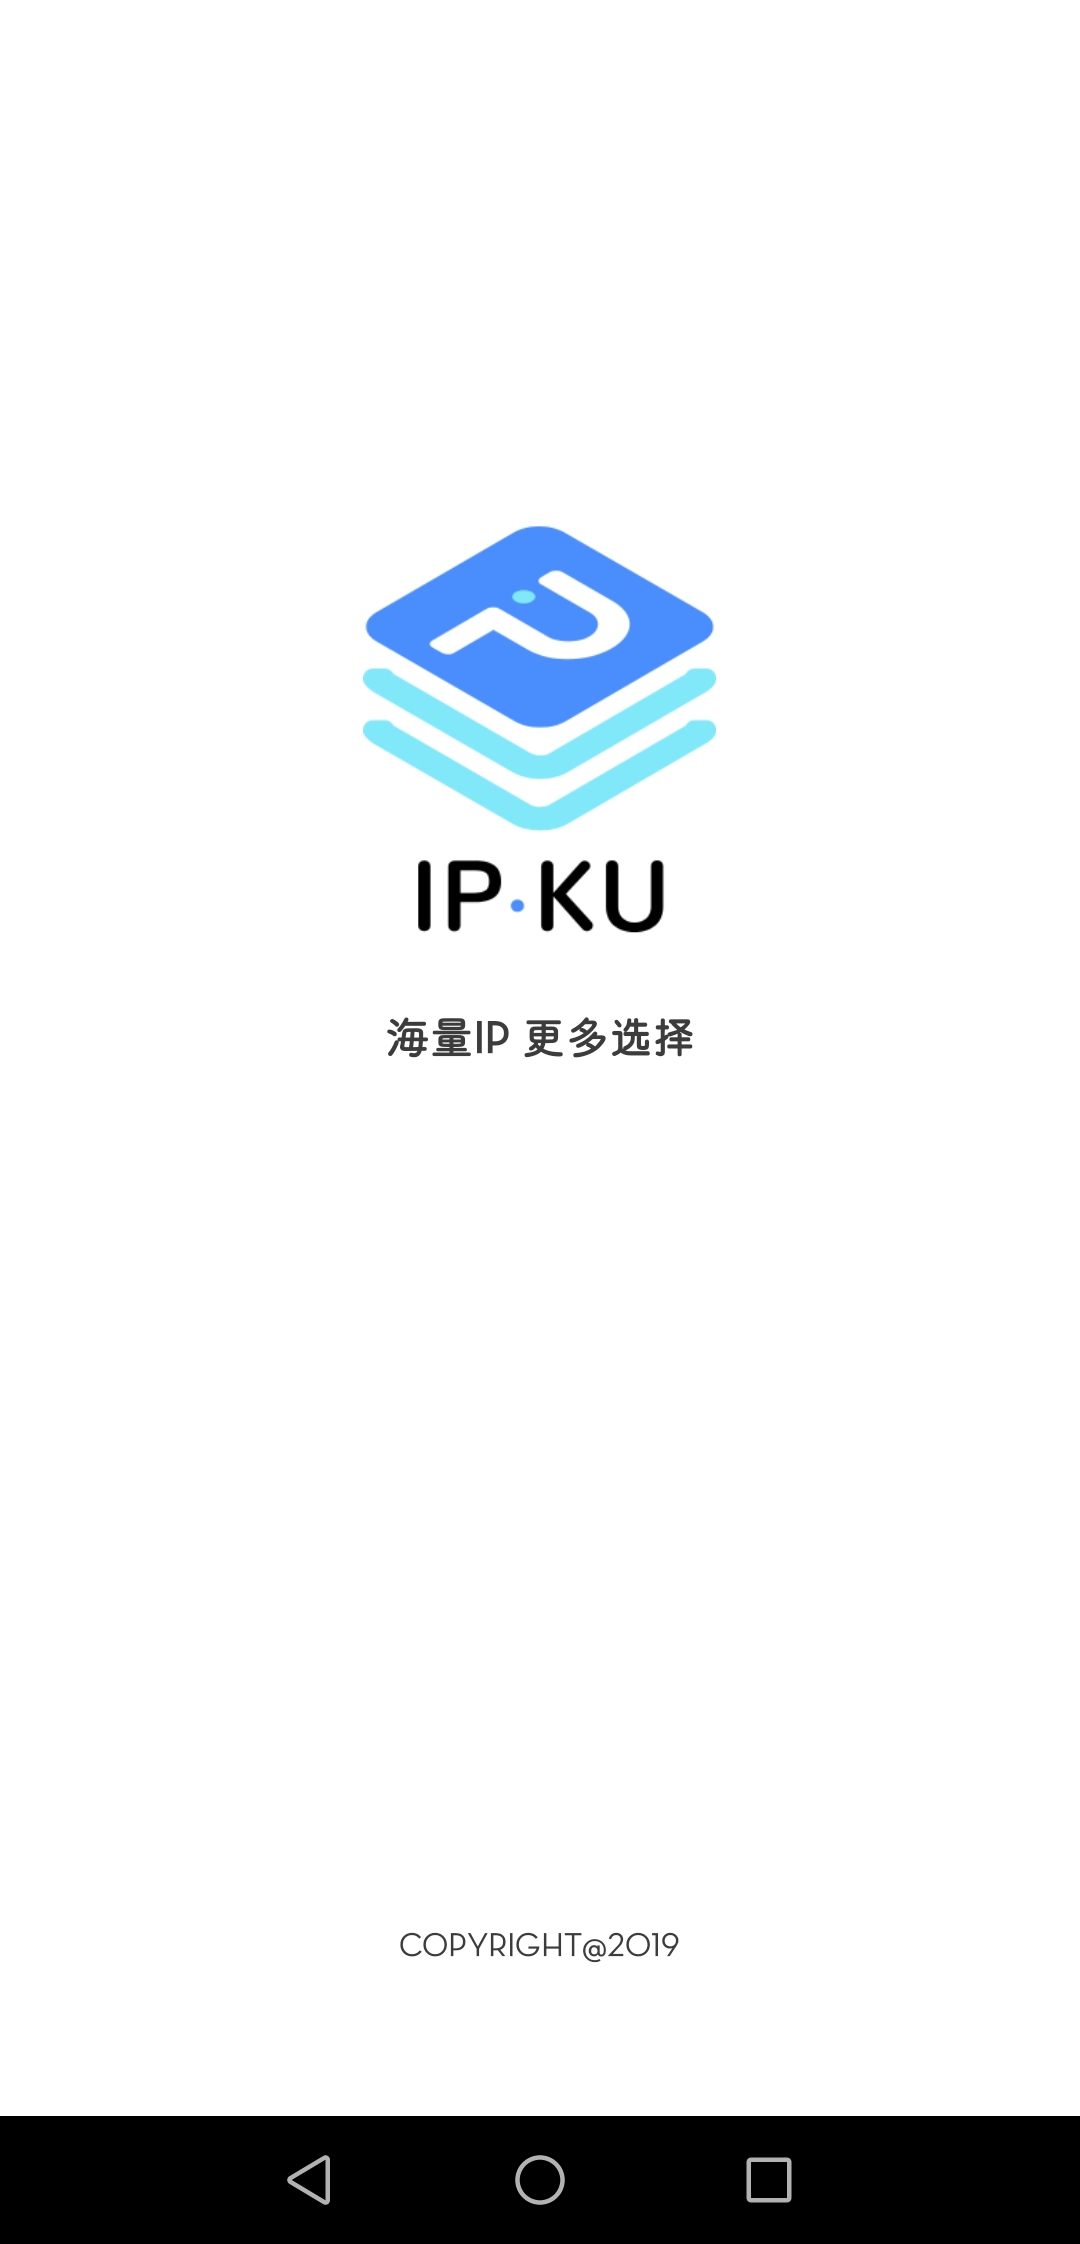 IPKU客户端下载